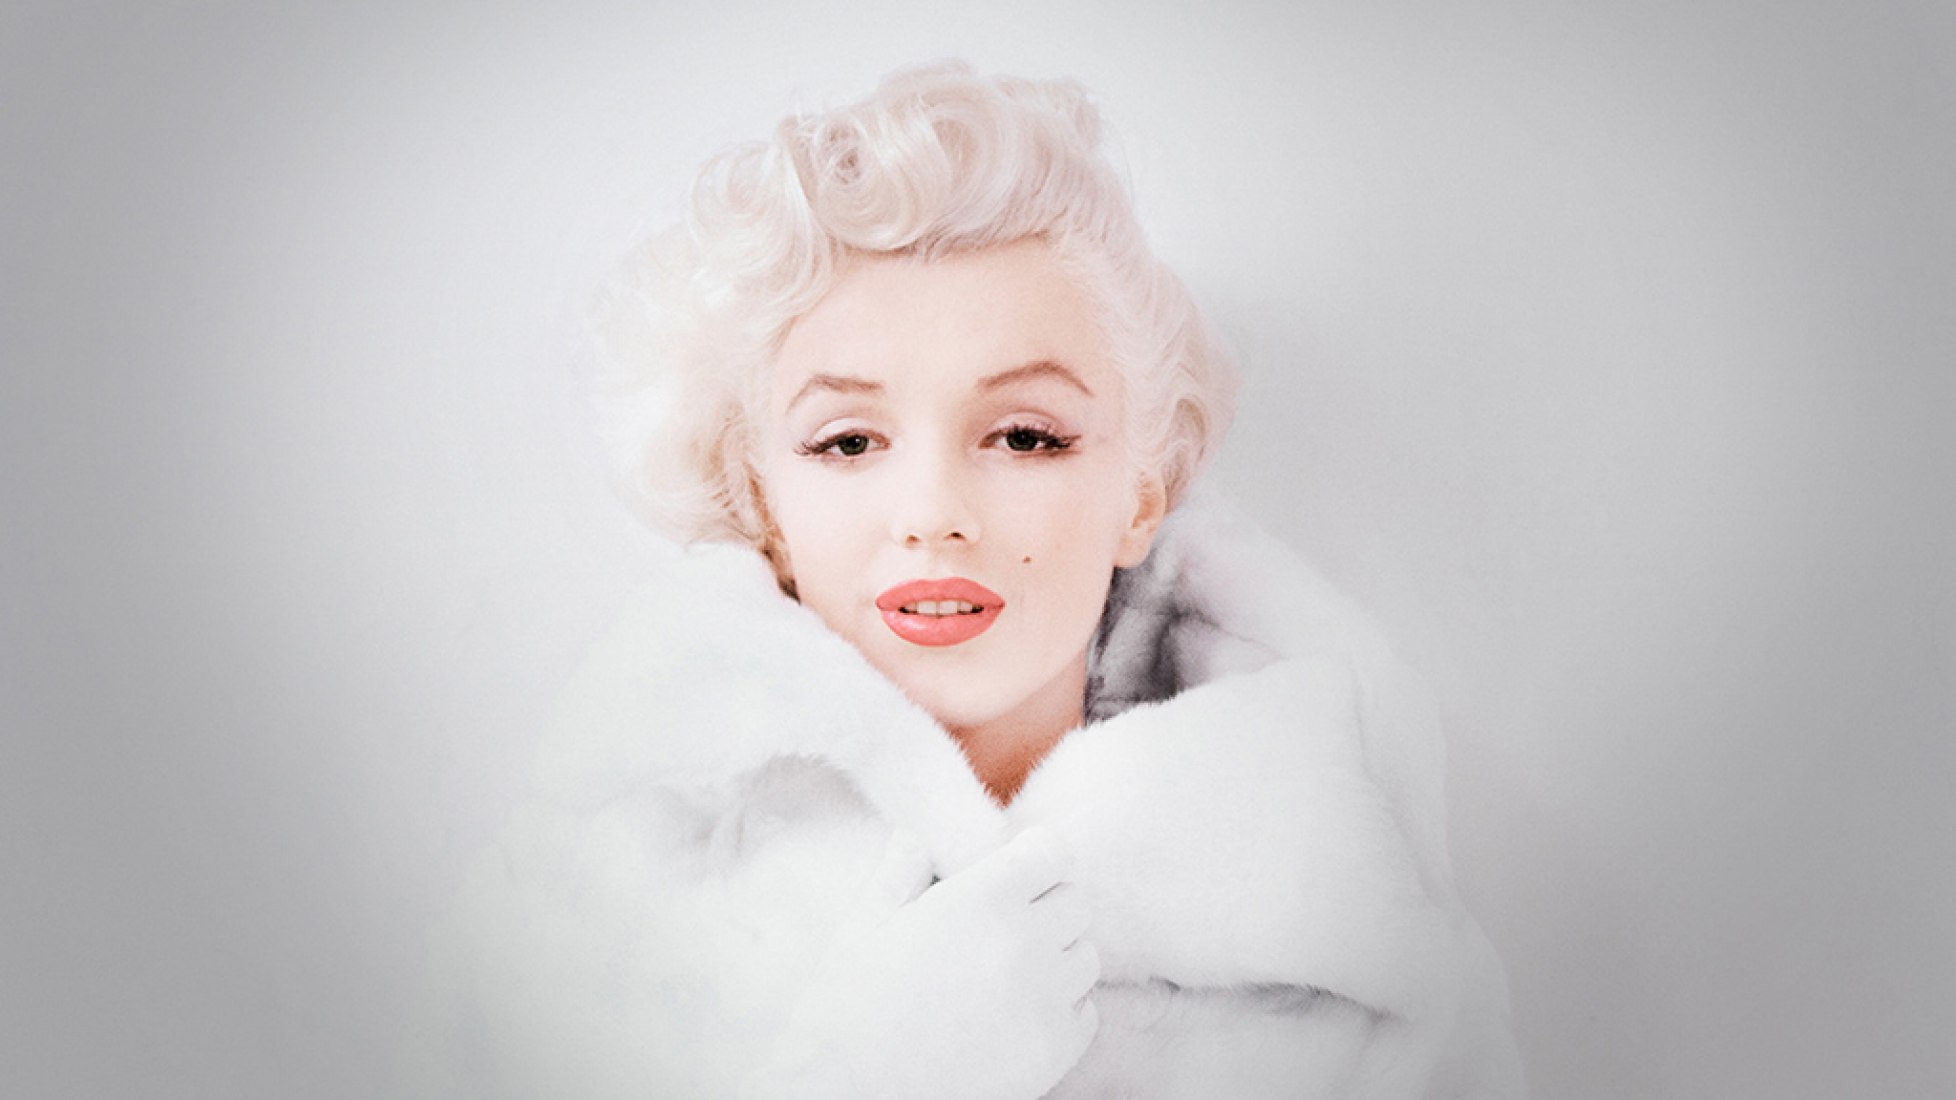 Love, Marilyn Documentary Film Trailer (2013). | The Strength of ...